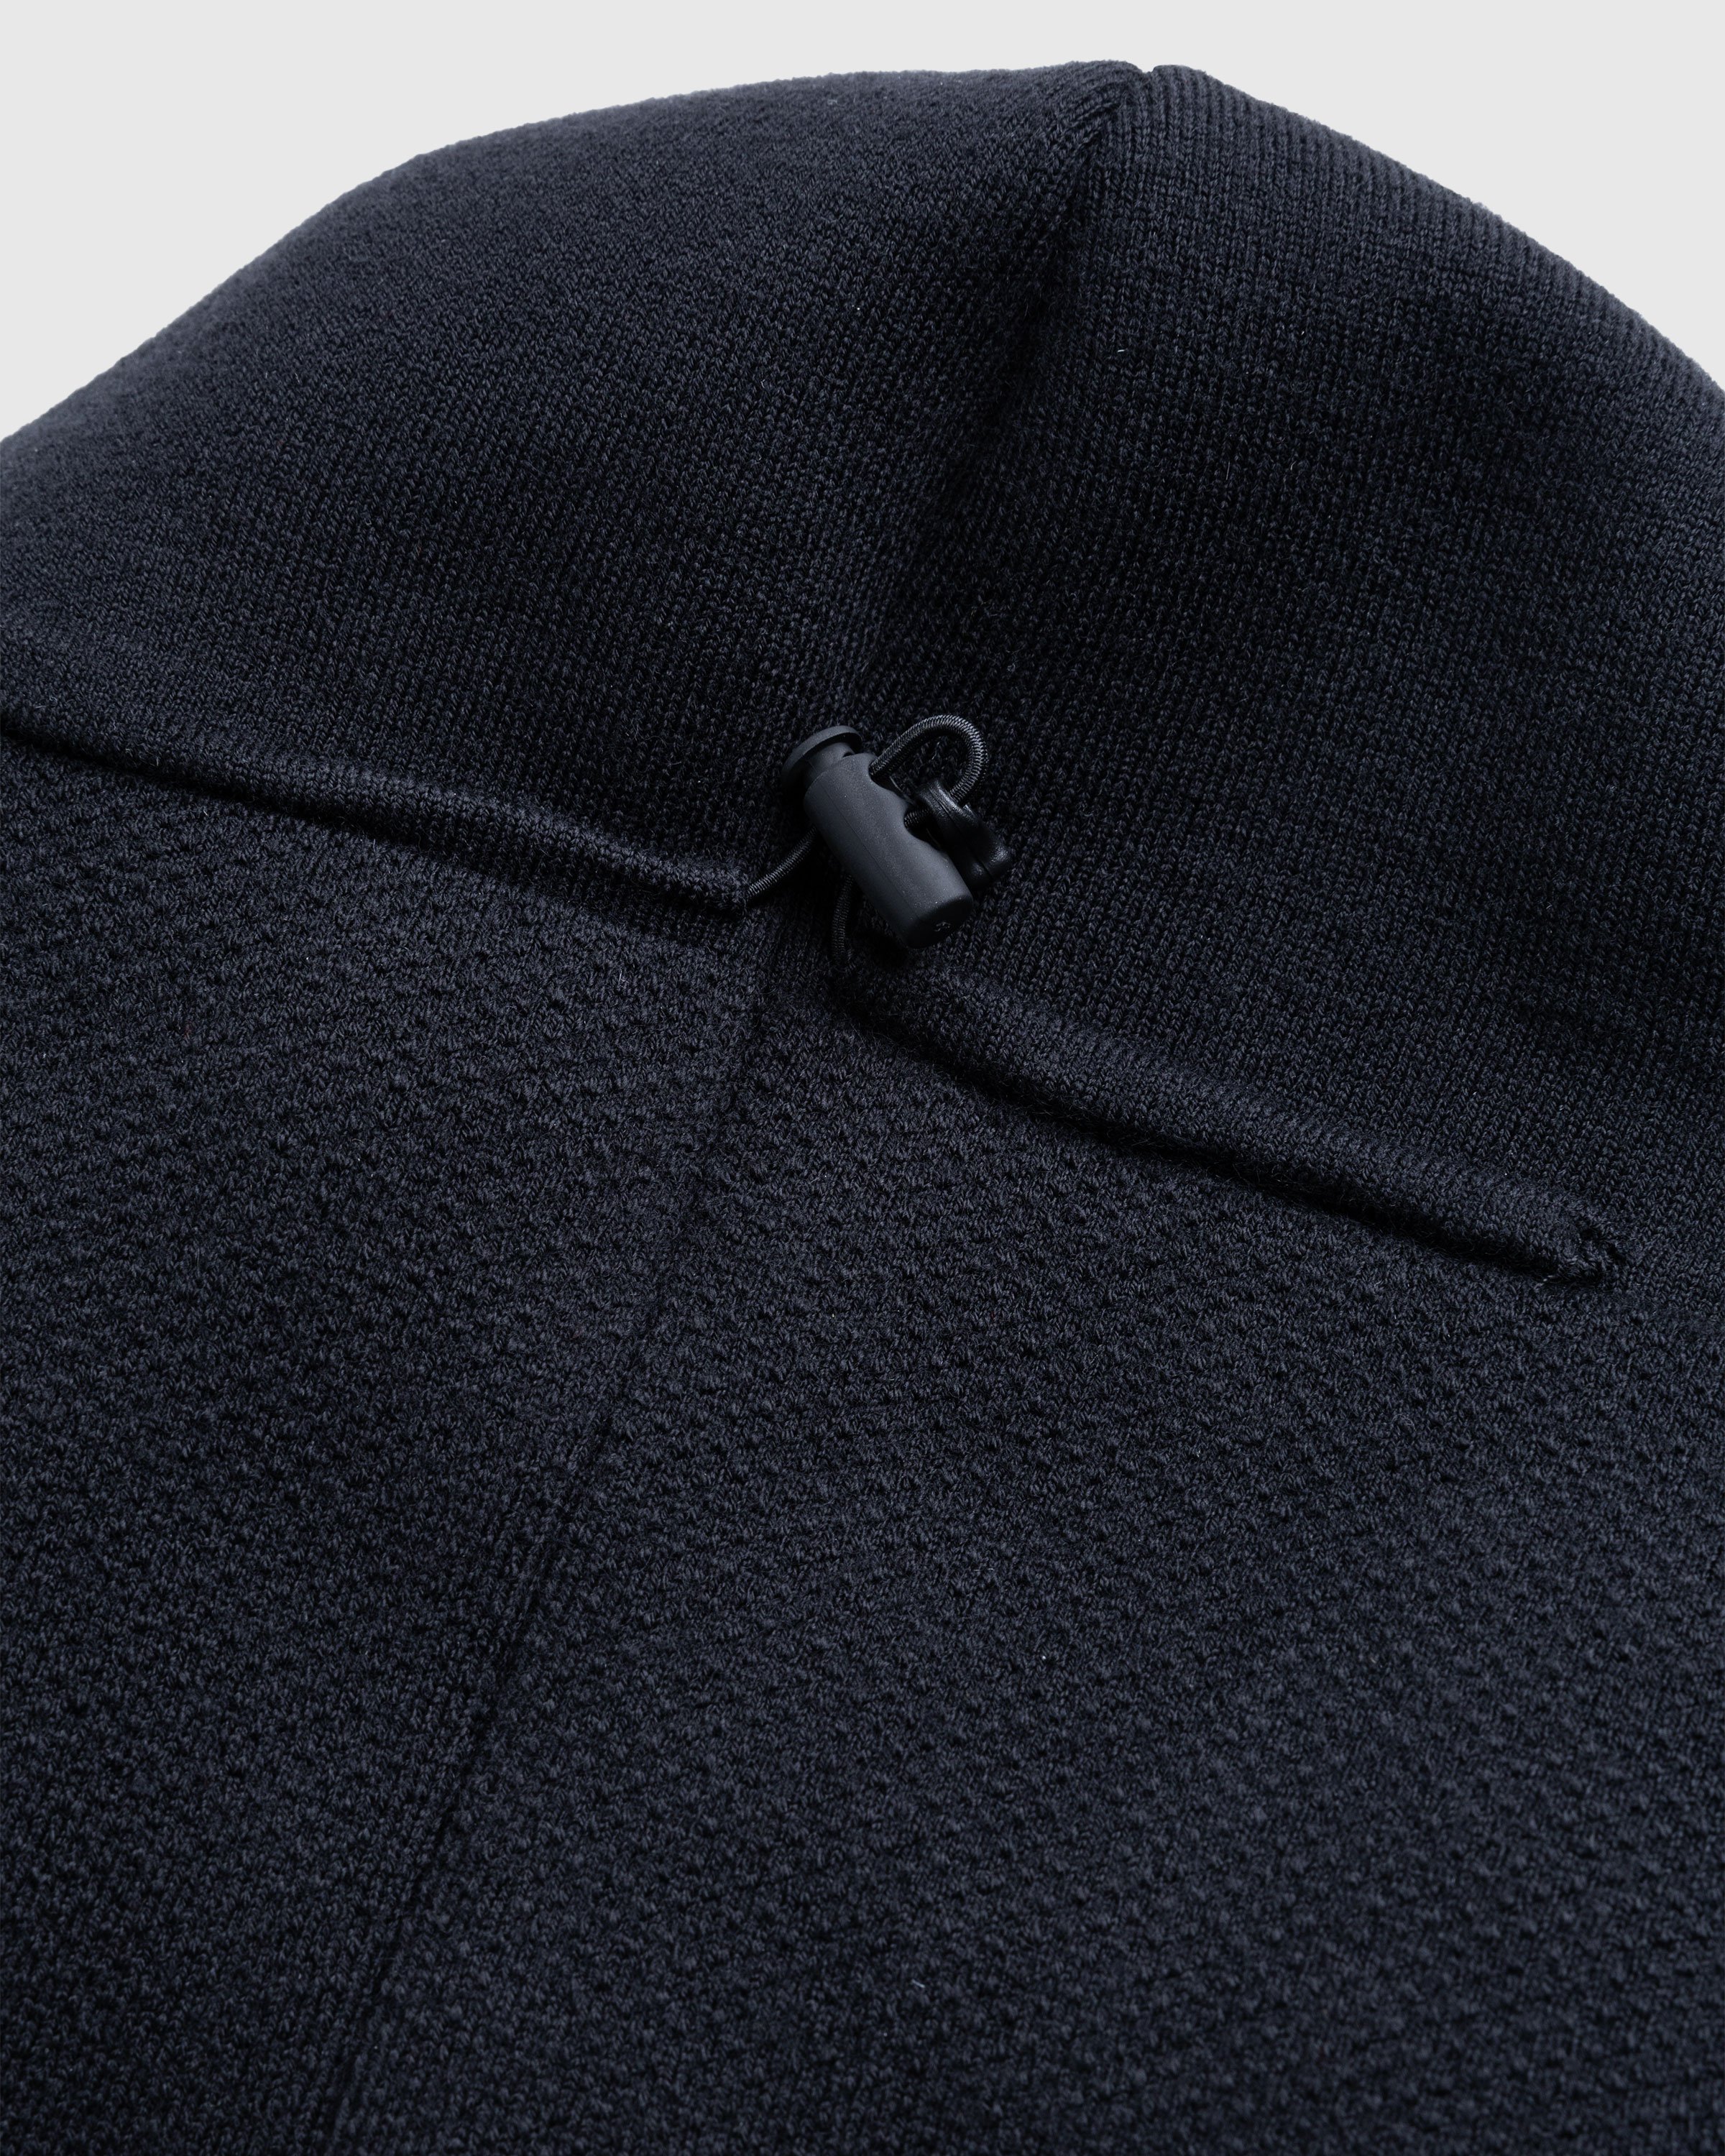 Reebok - Knit Mask Hat Black - Accessories - Black - Image 7